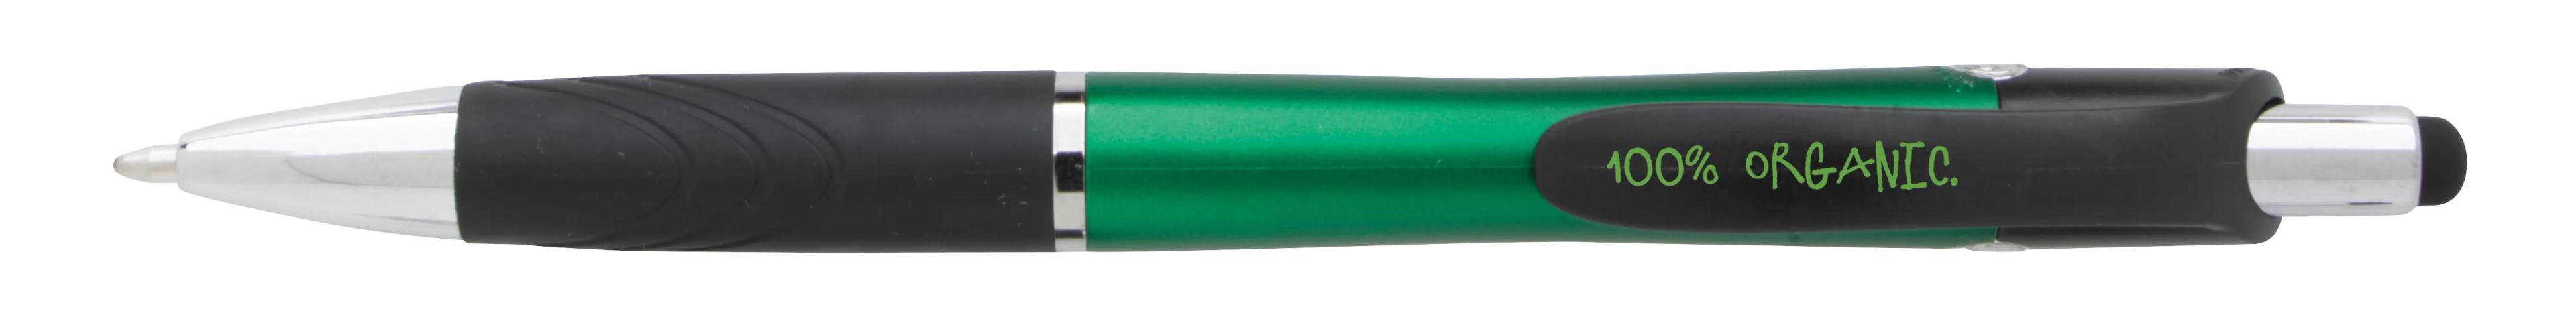 Souvenir® Emblem Stylus Pen 31 of 37